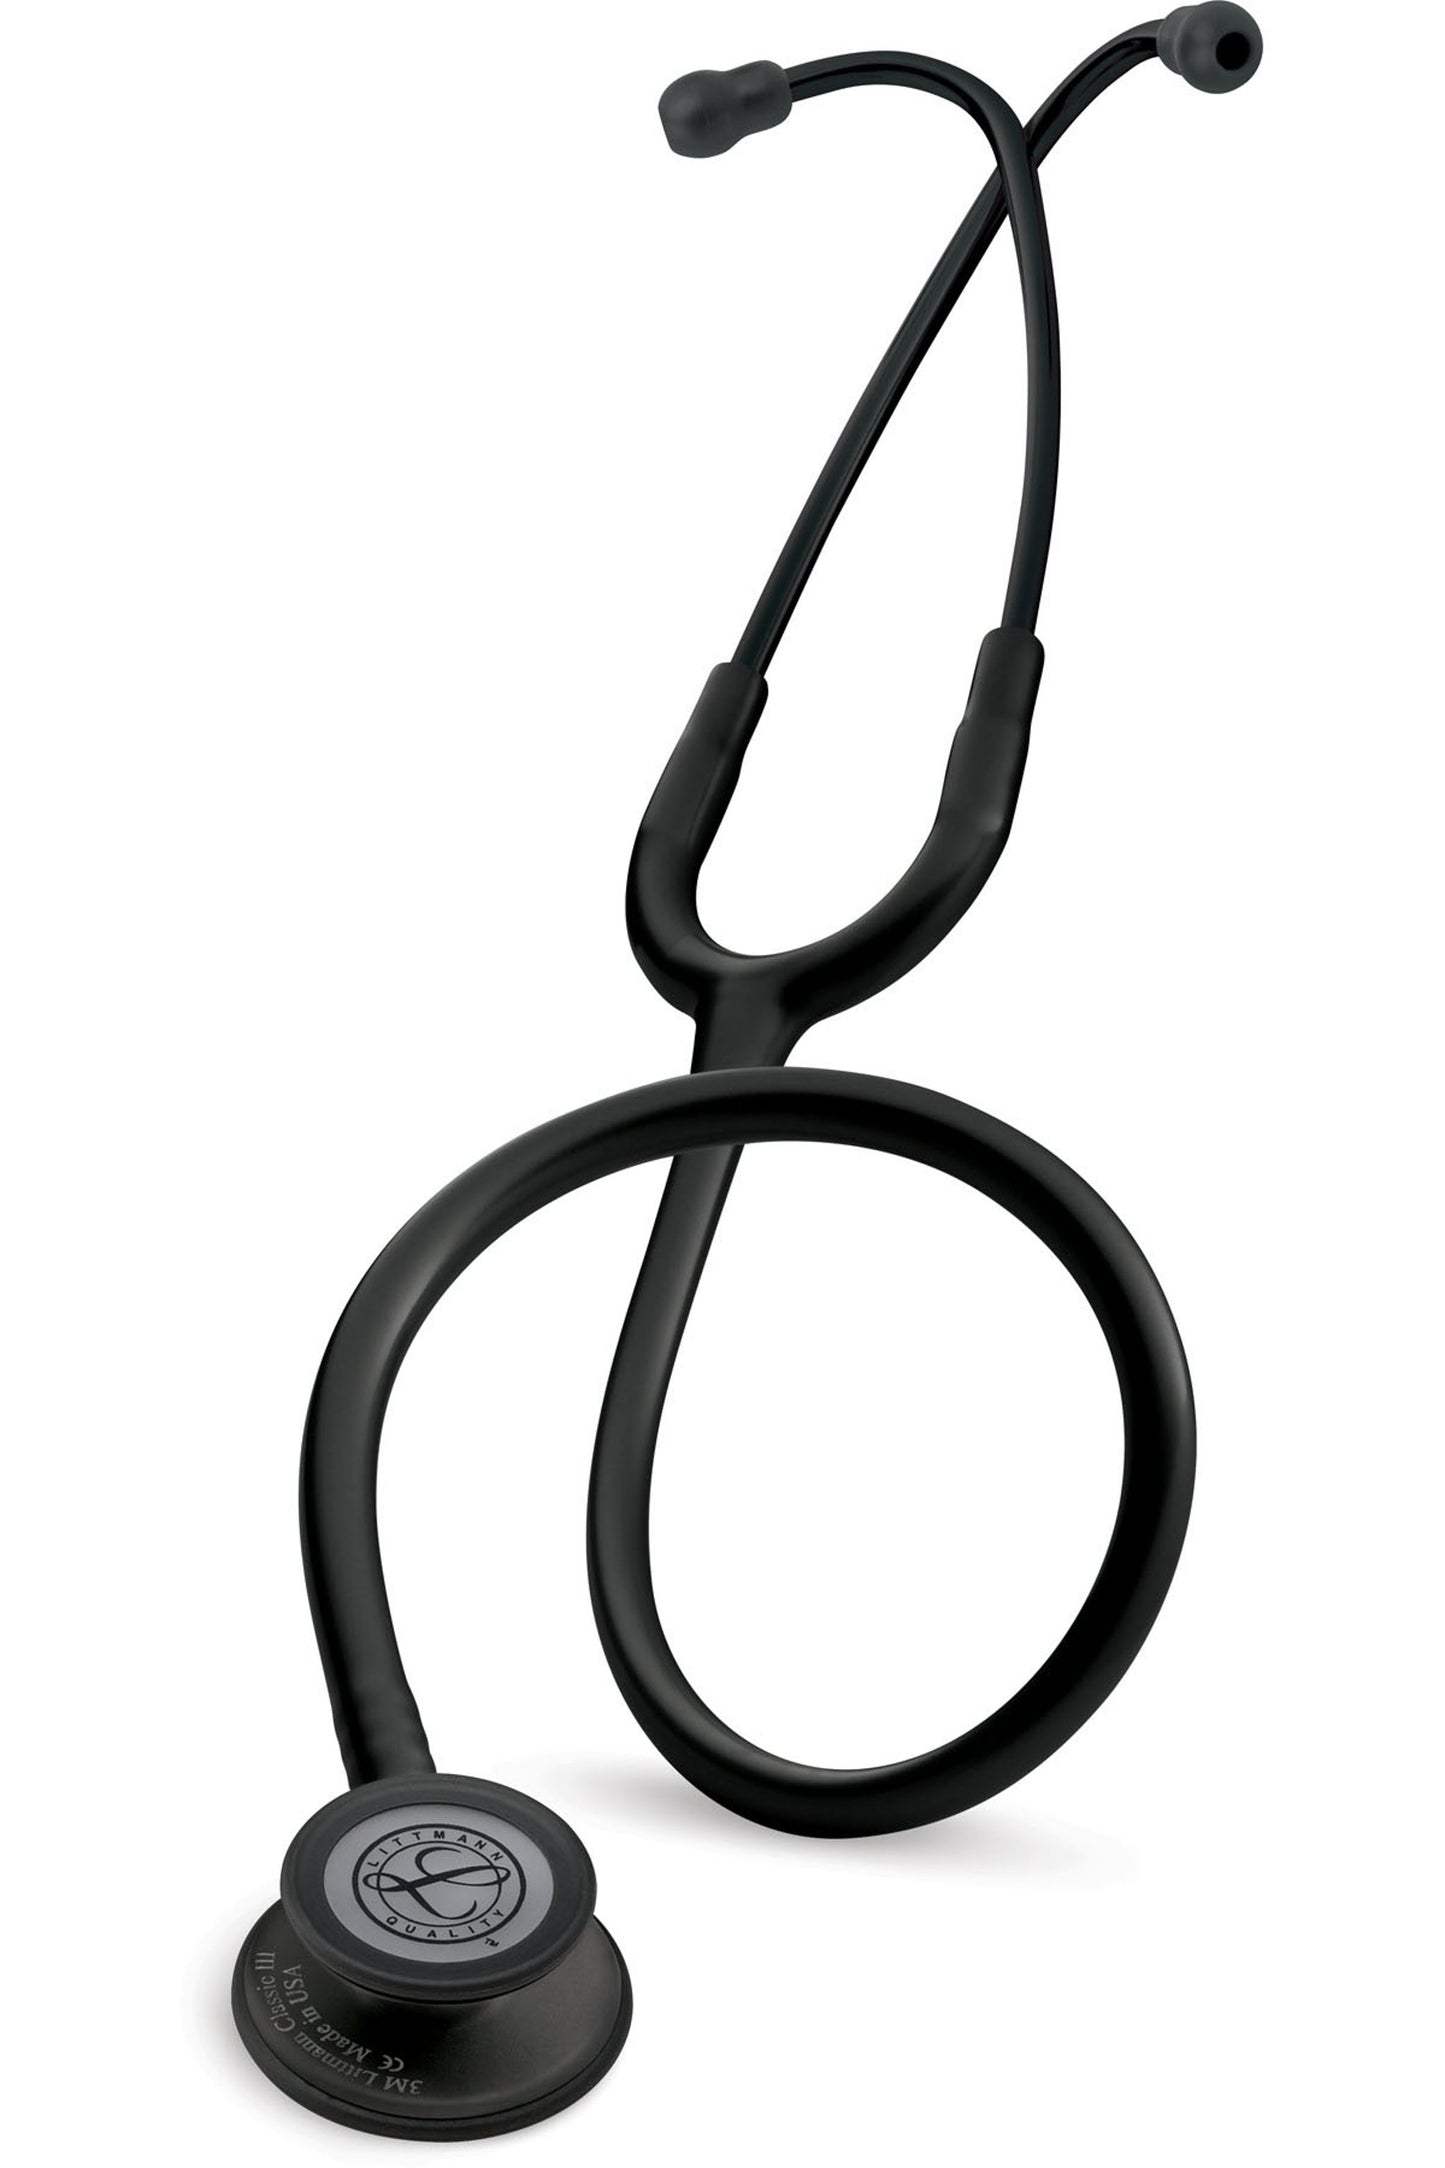 Littmann Lightweight II S.E. Stethoscope - Black